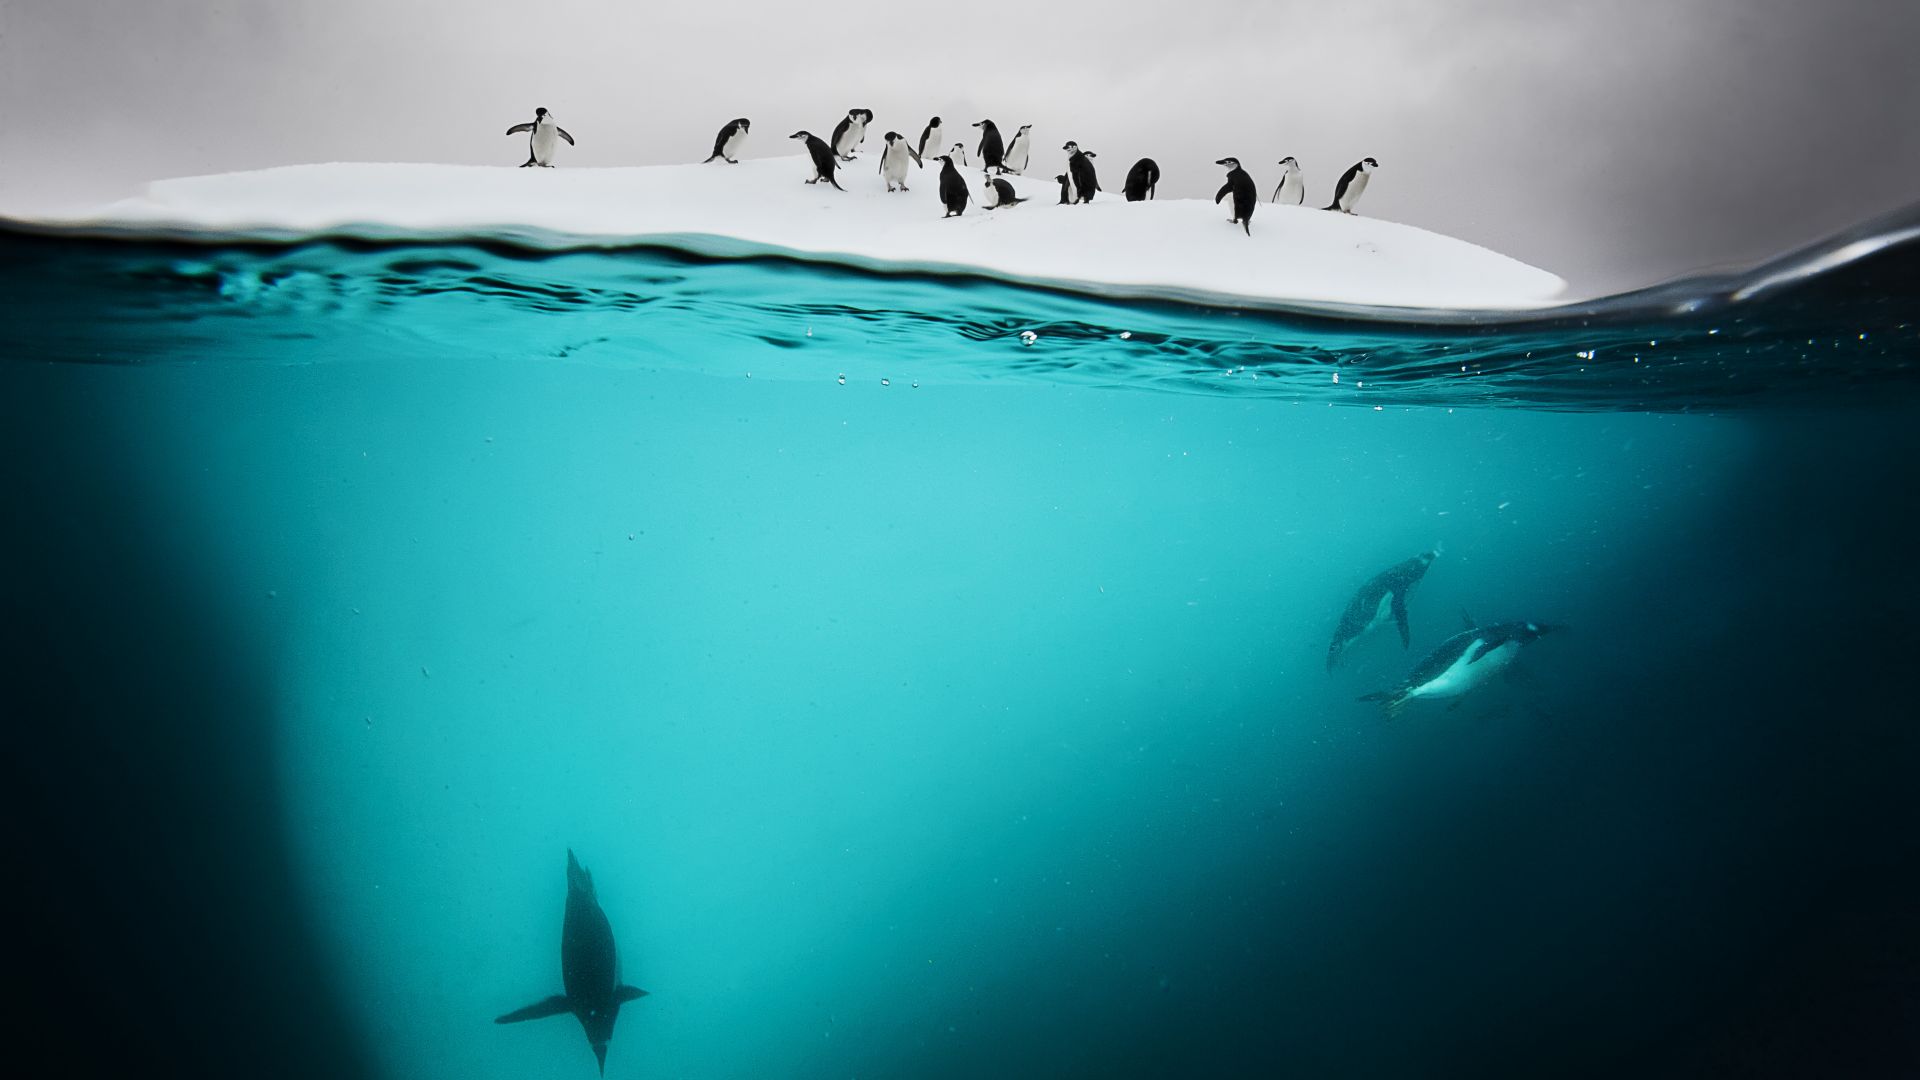 Penguin, New Zealand, underwater (horizontal)